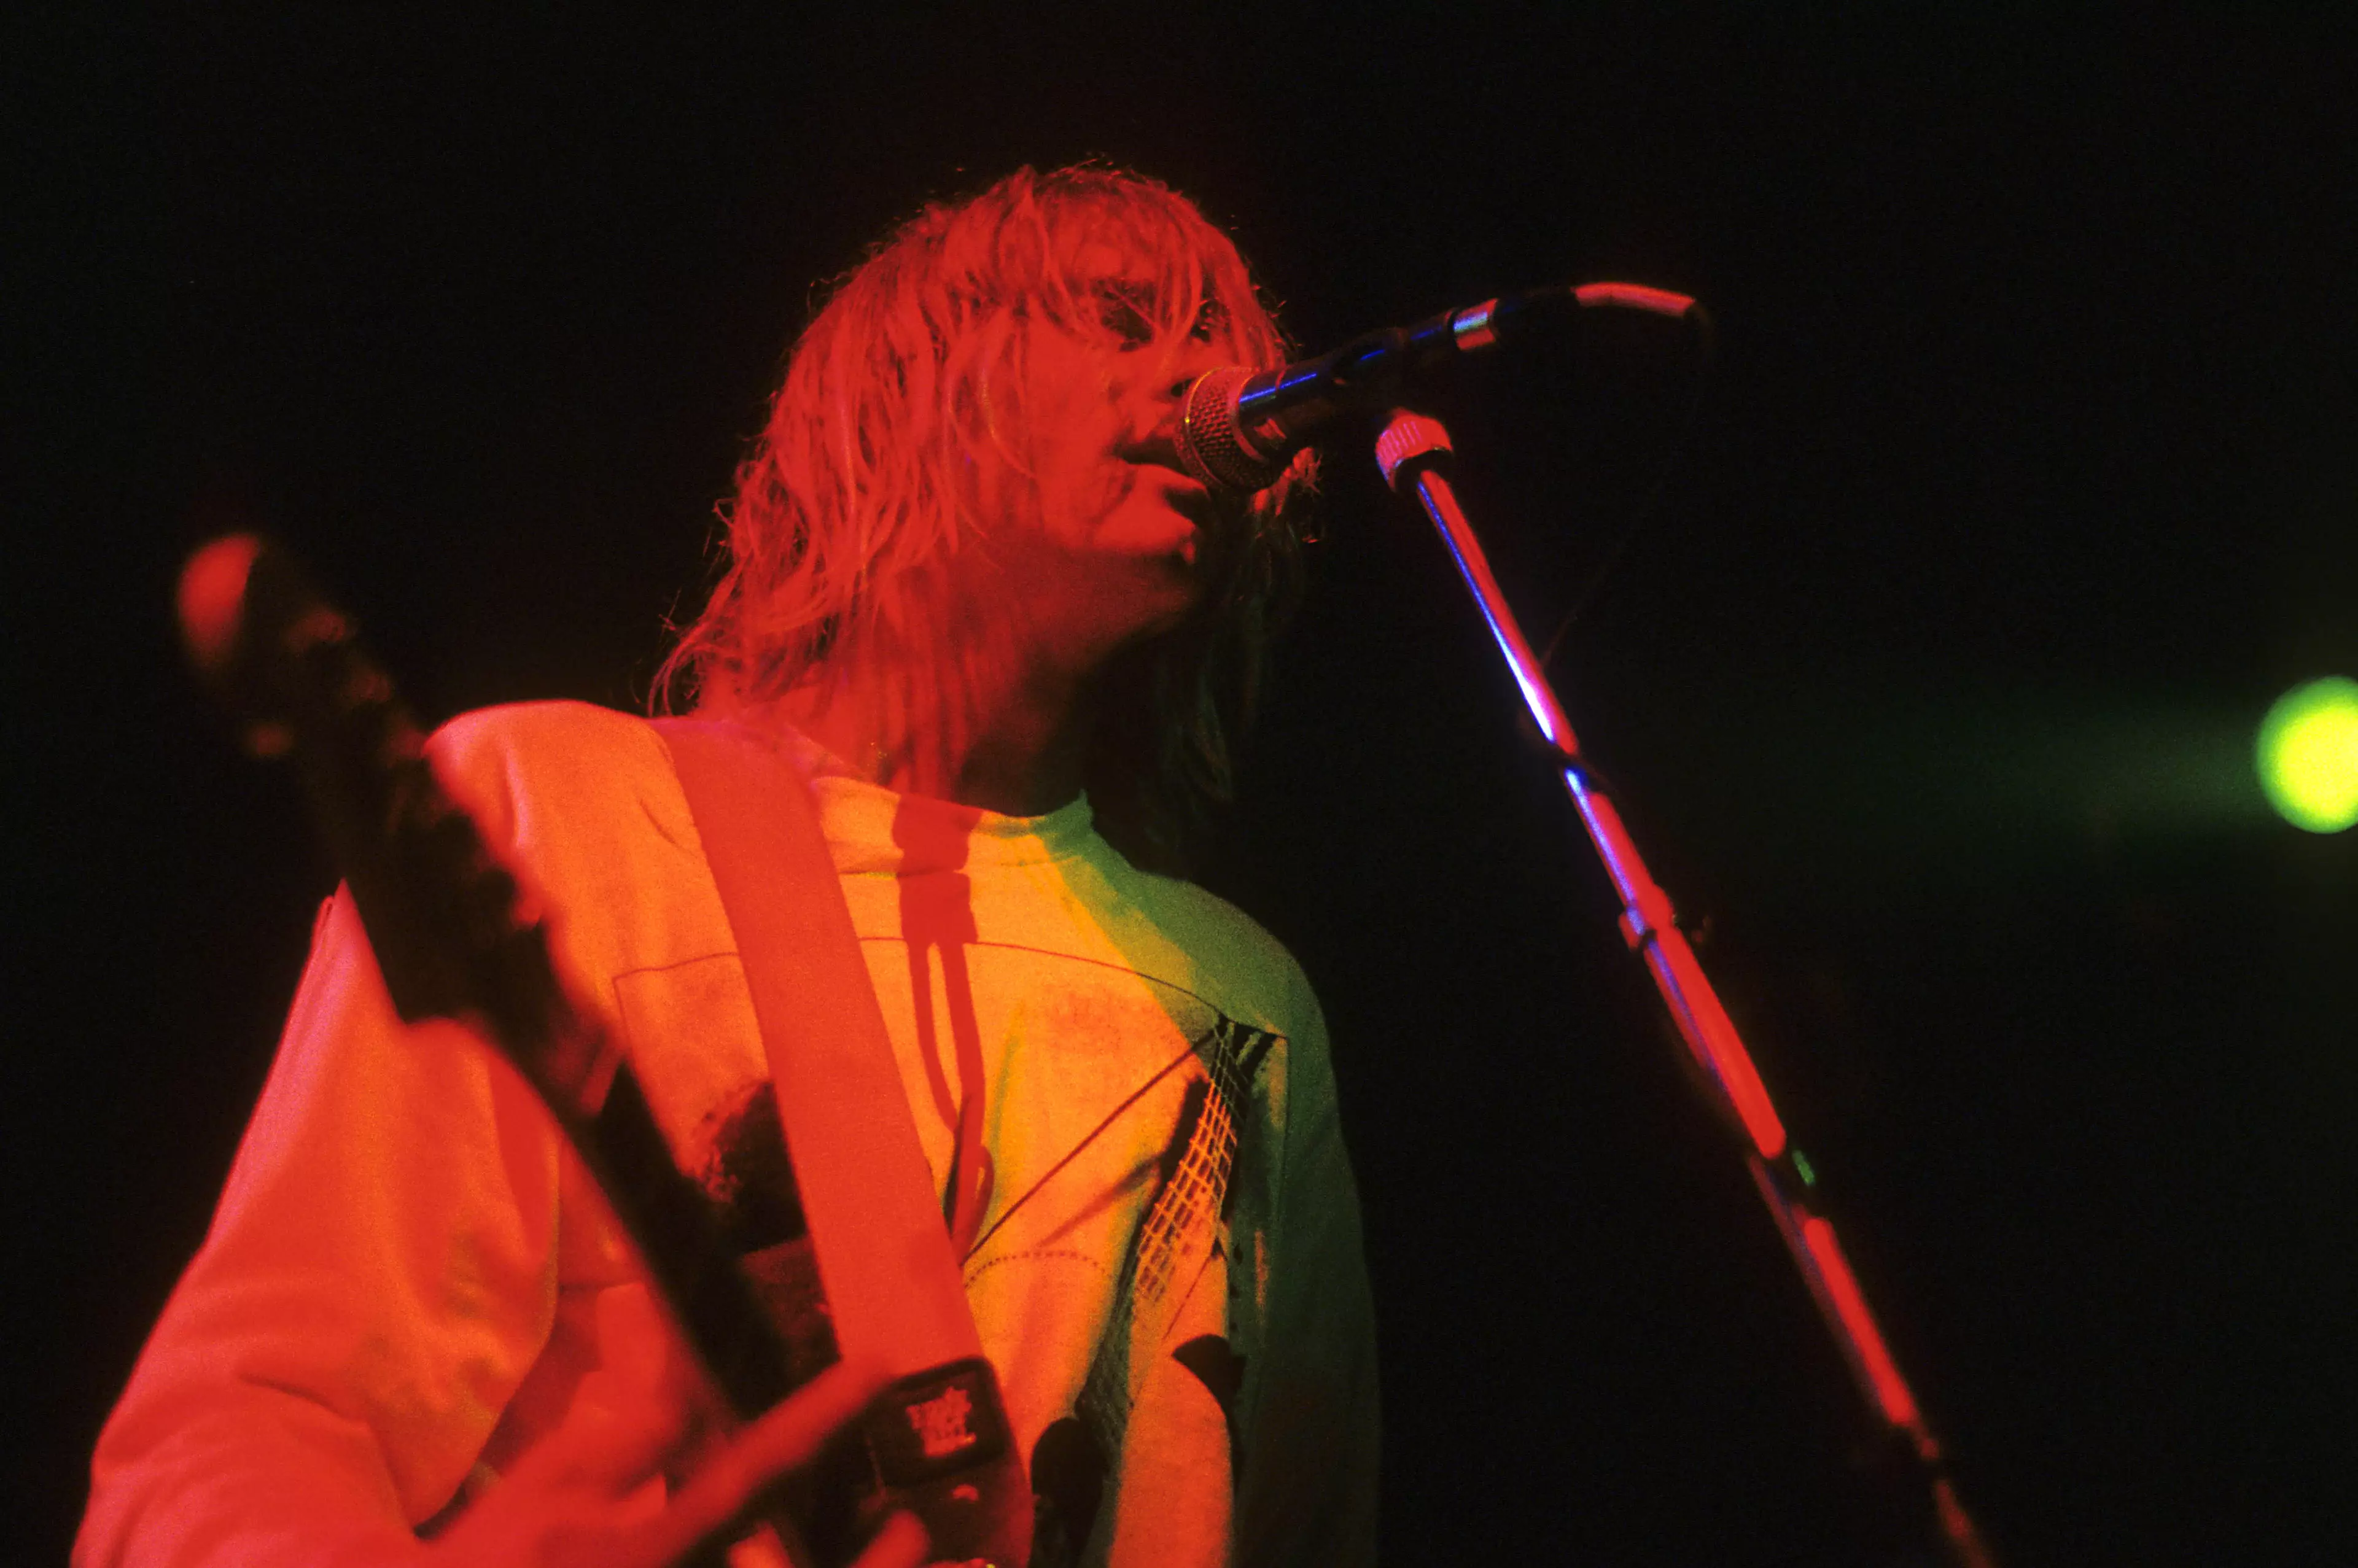 Kurt Cobain.